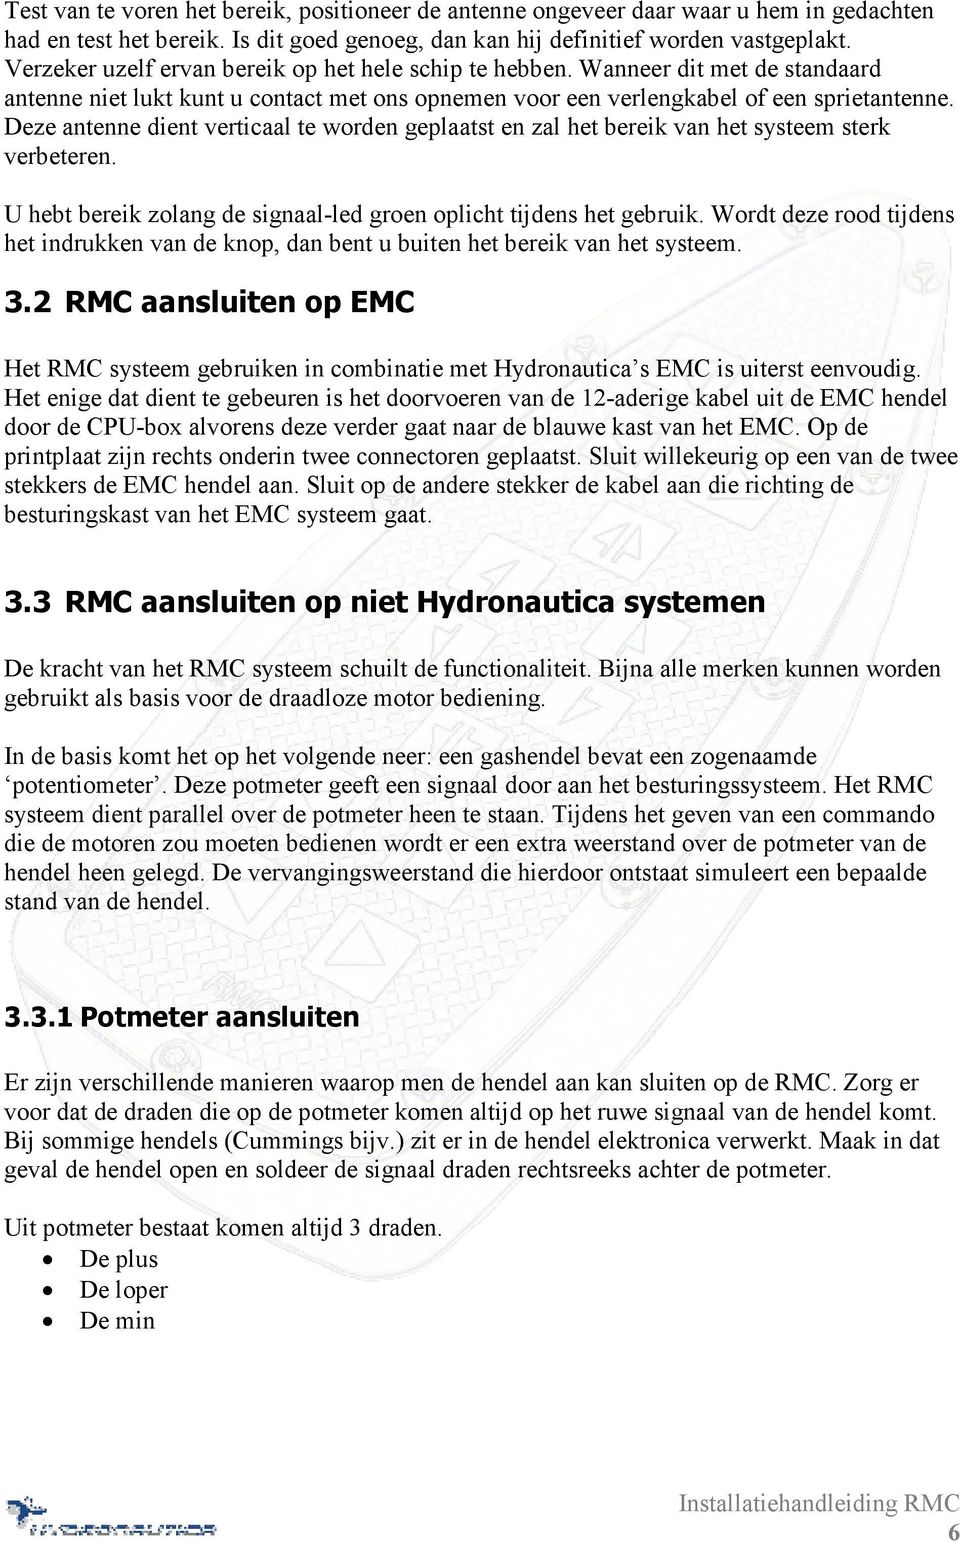 RMC installatiehandleiding - PDF Free Download